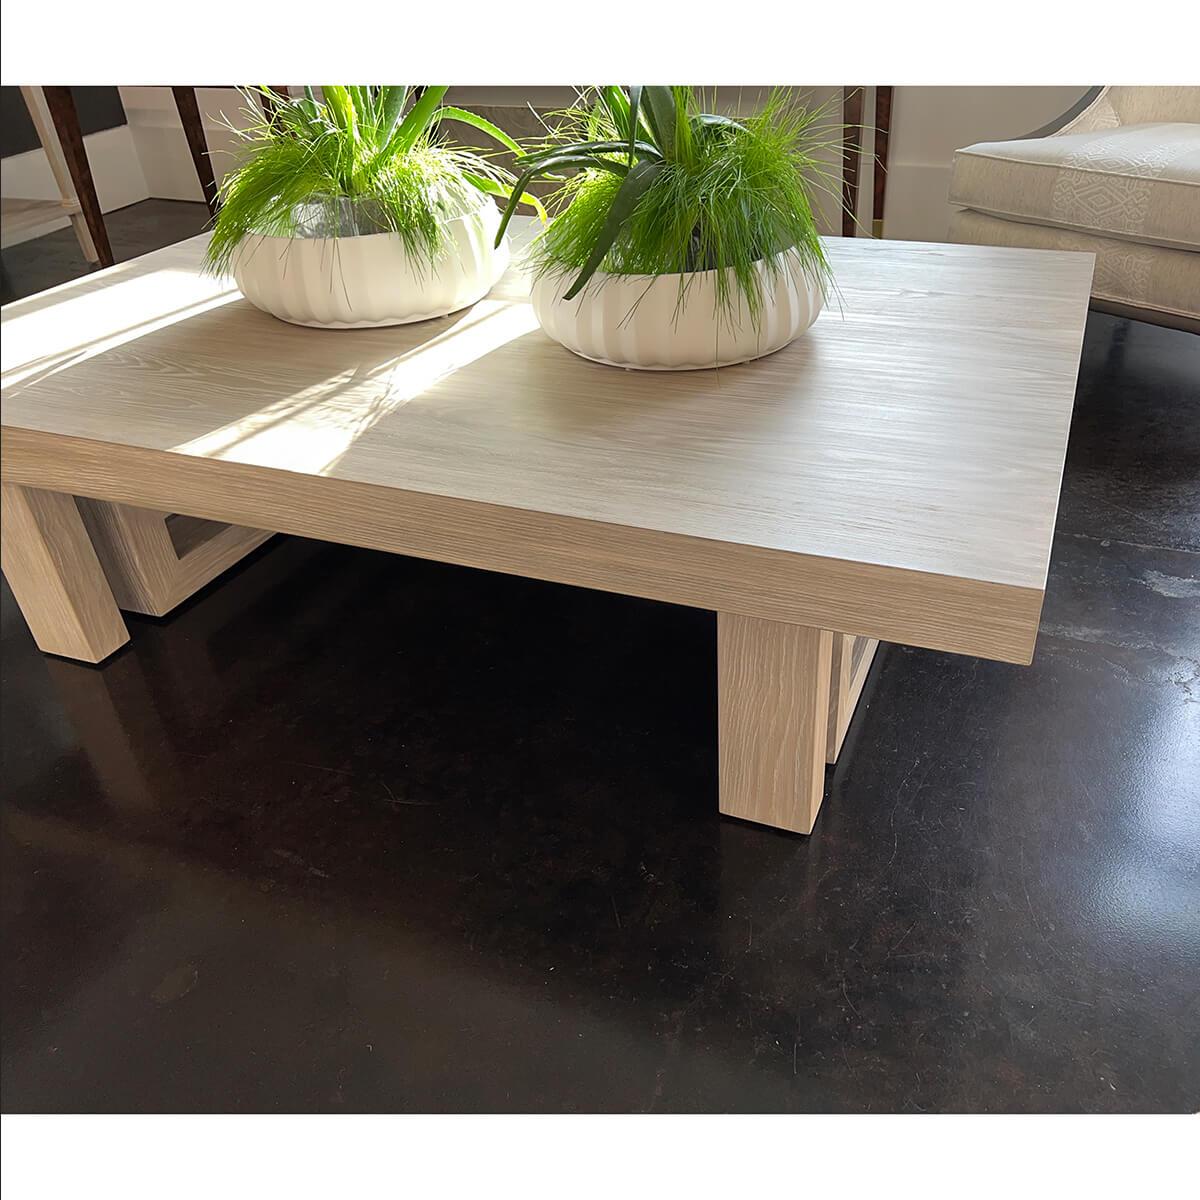 greek style coffee table